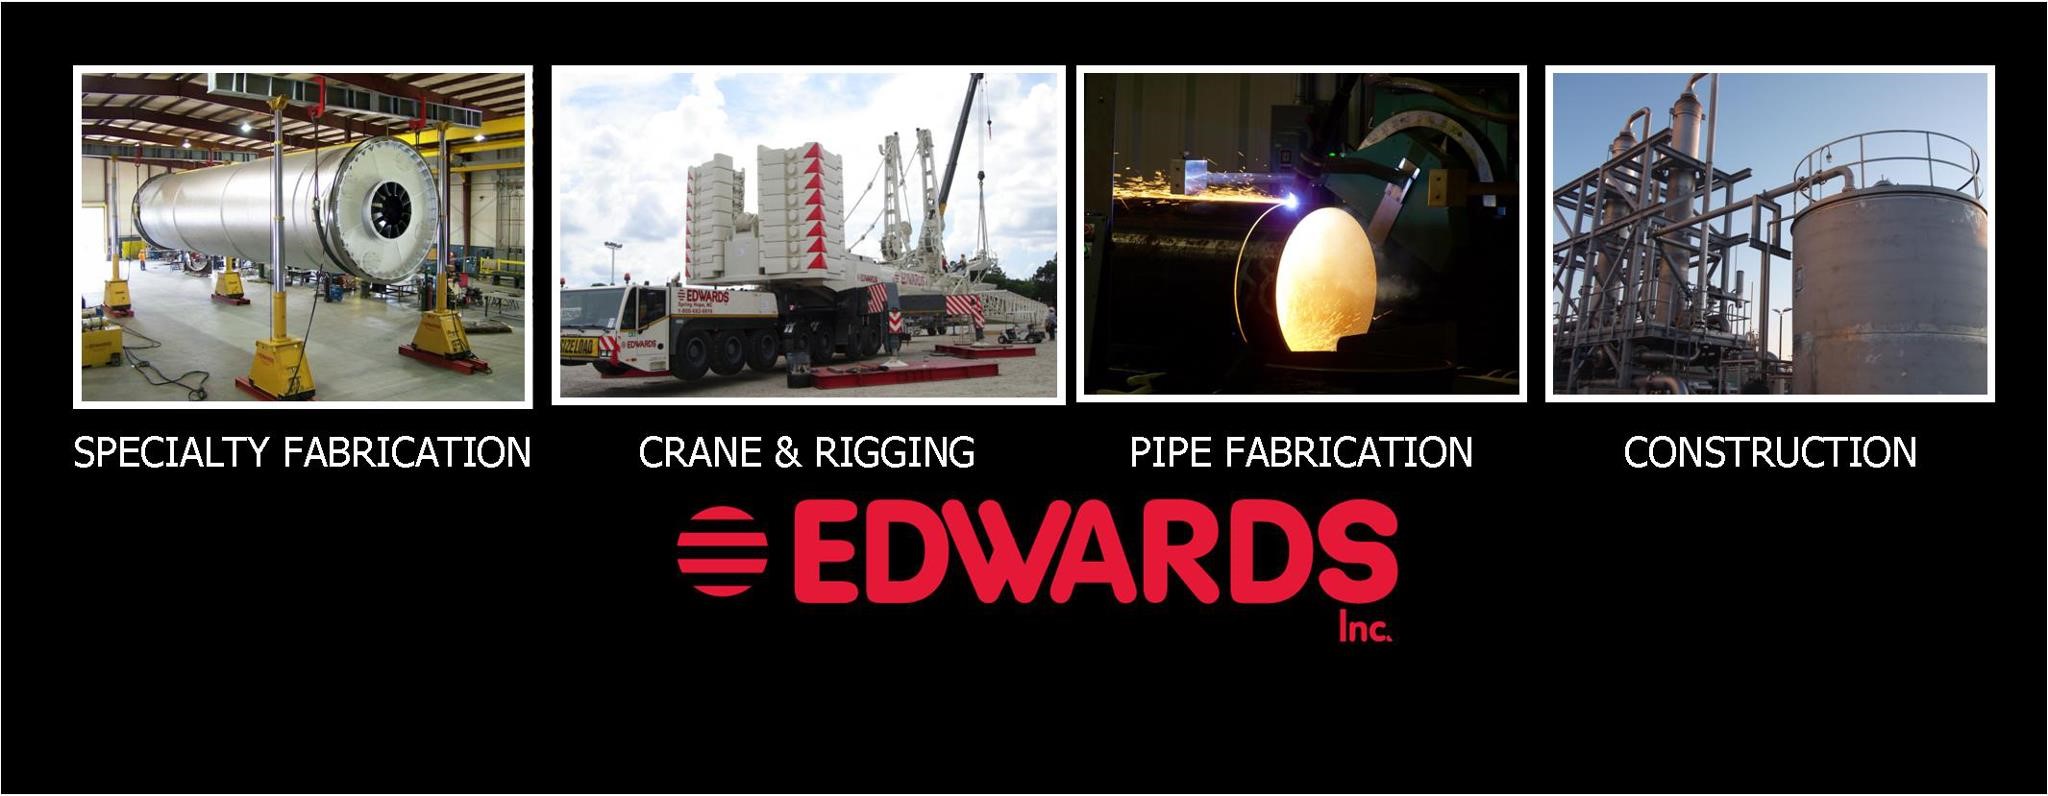 Edwards Inc. Construction Site Safety Audit